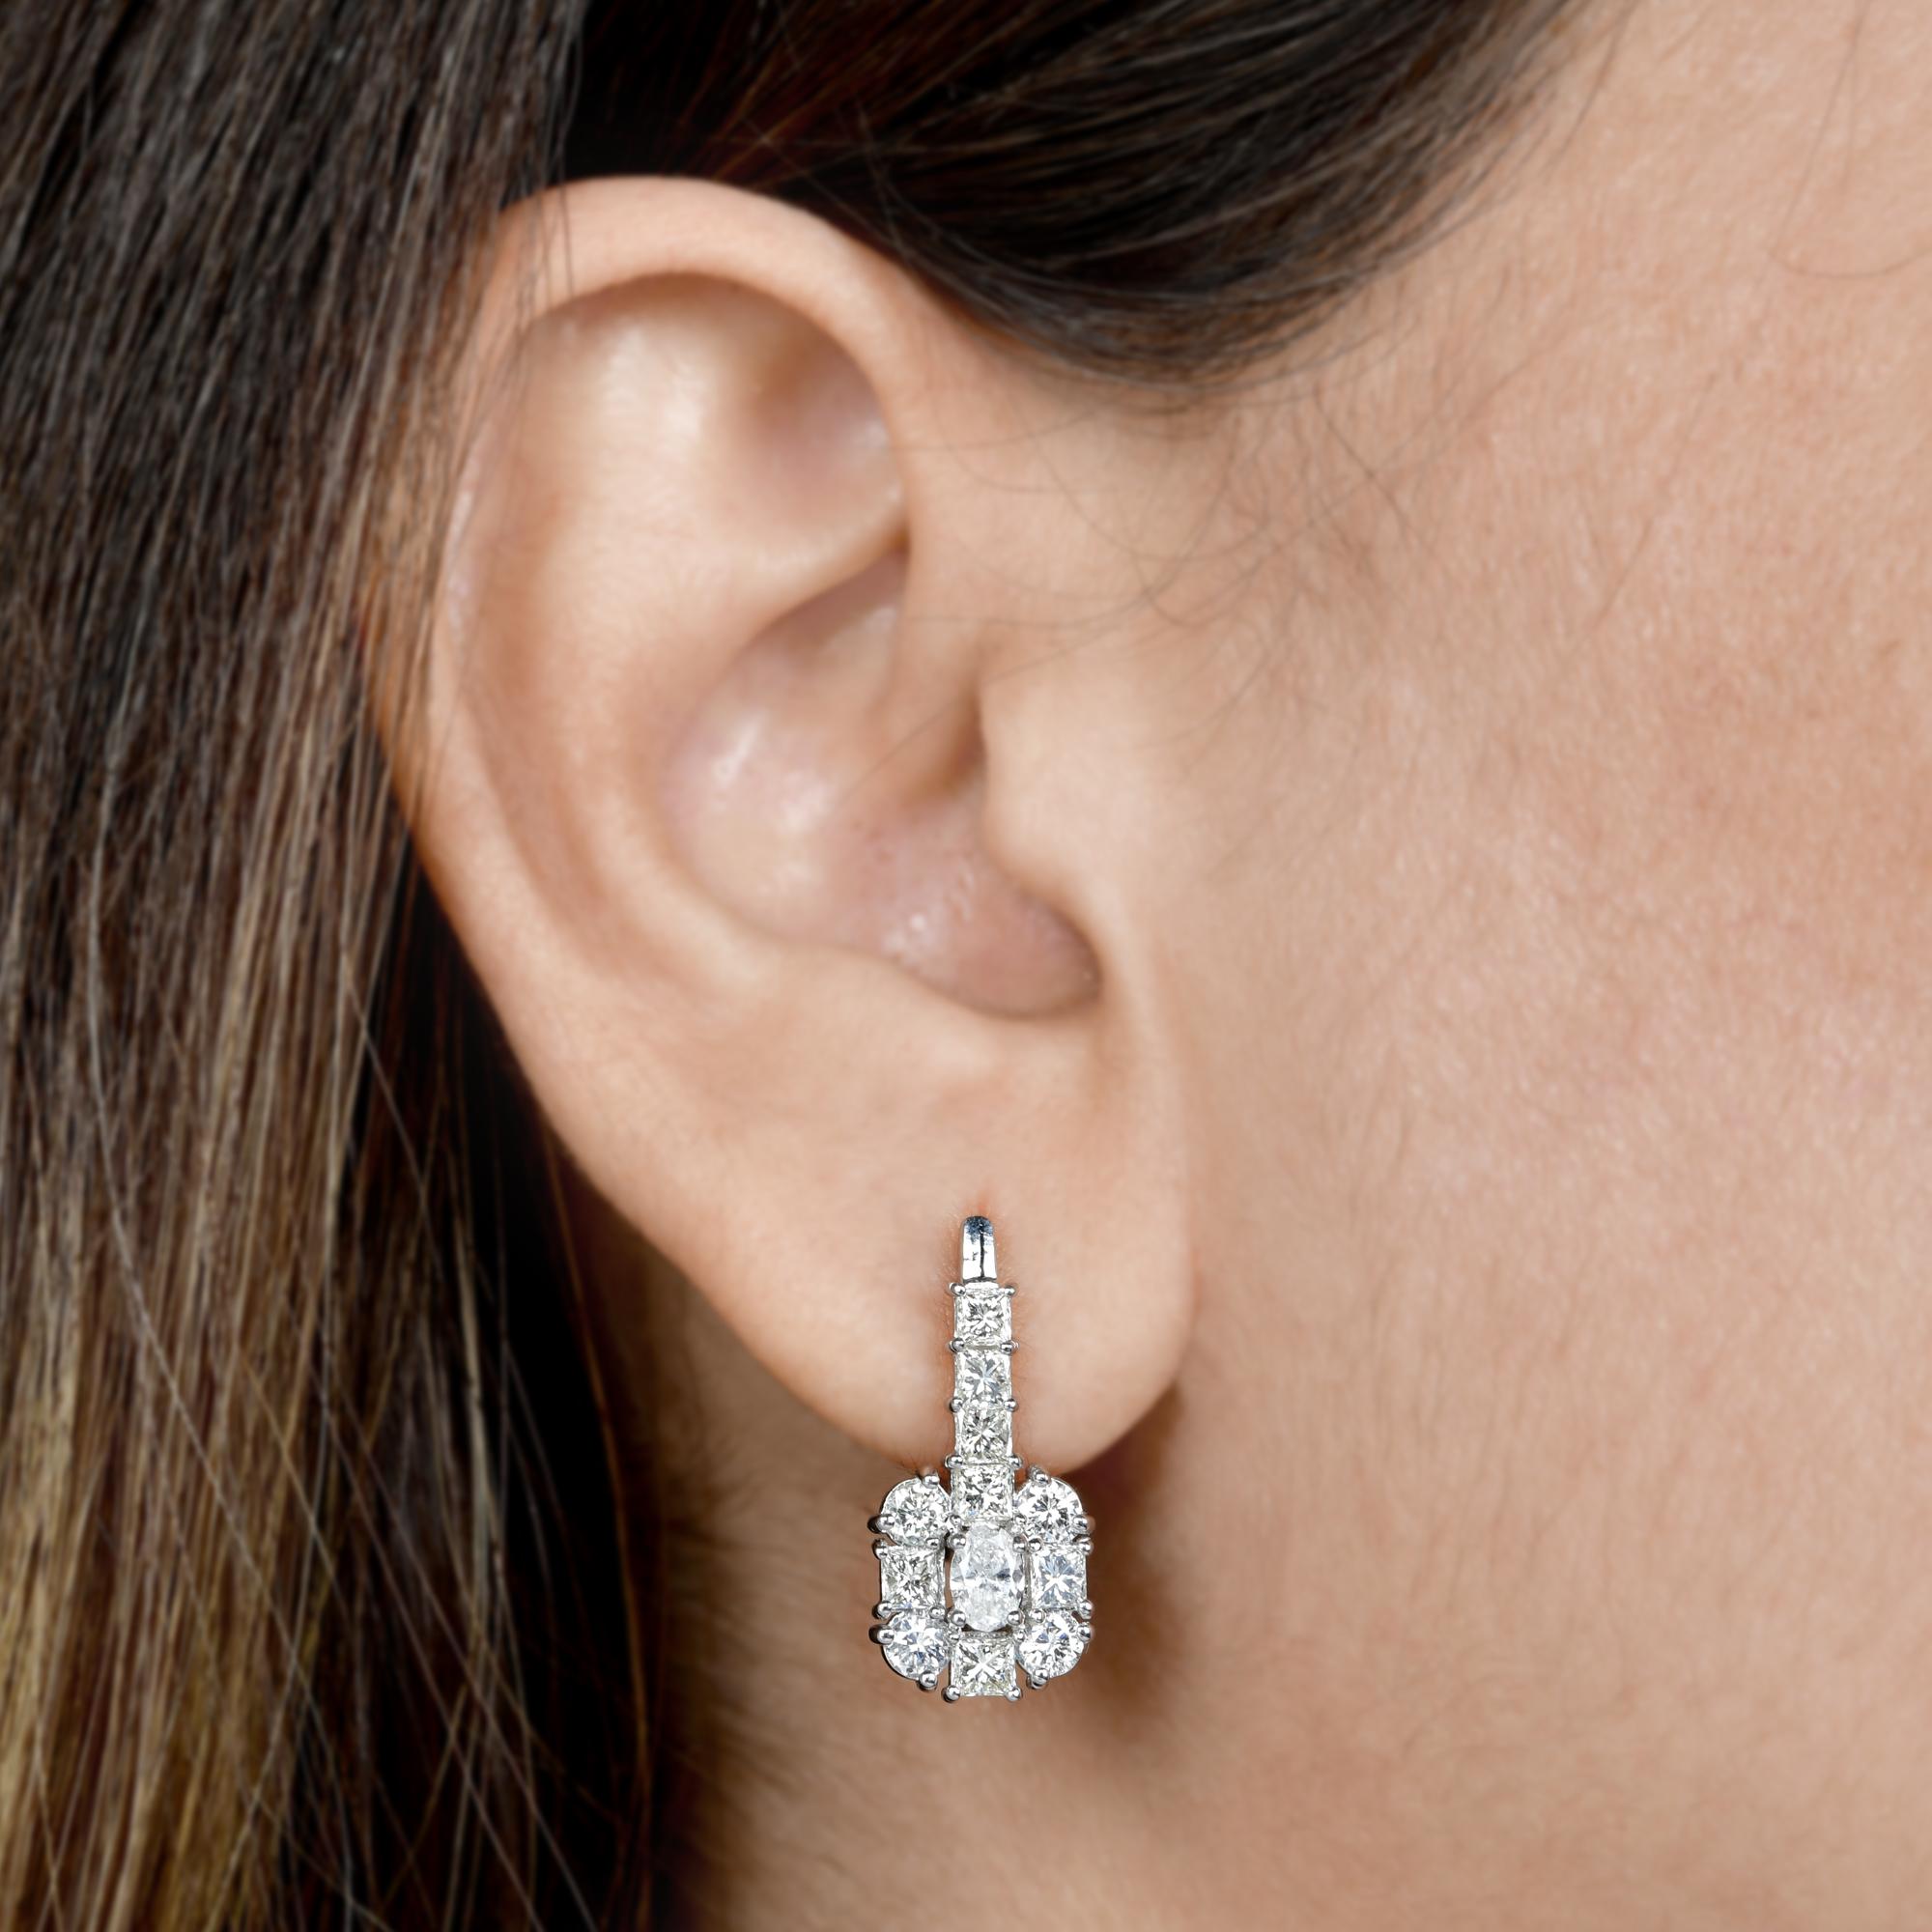 Baguette Cut SI Clarity HI Color Princess Cut Diamond Stud Earrings 18k Gold Handmade Jewelry For Sale